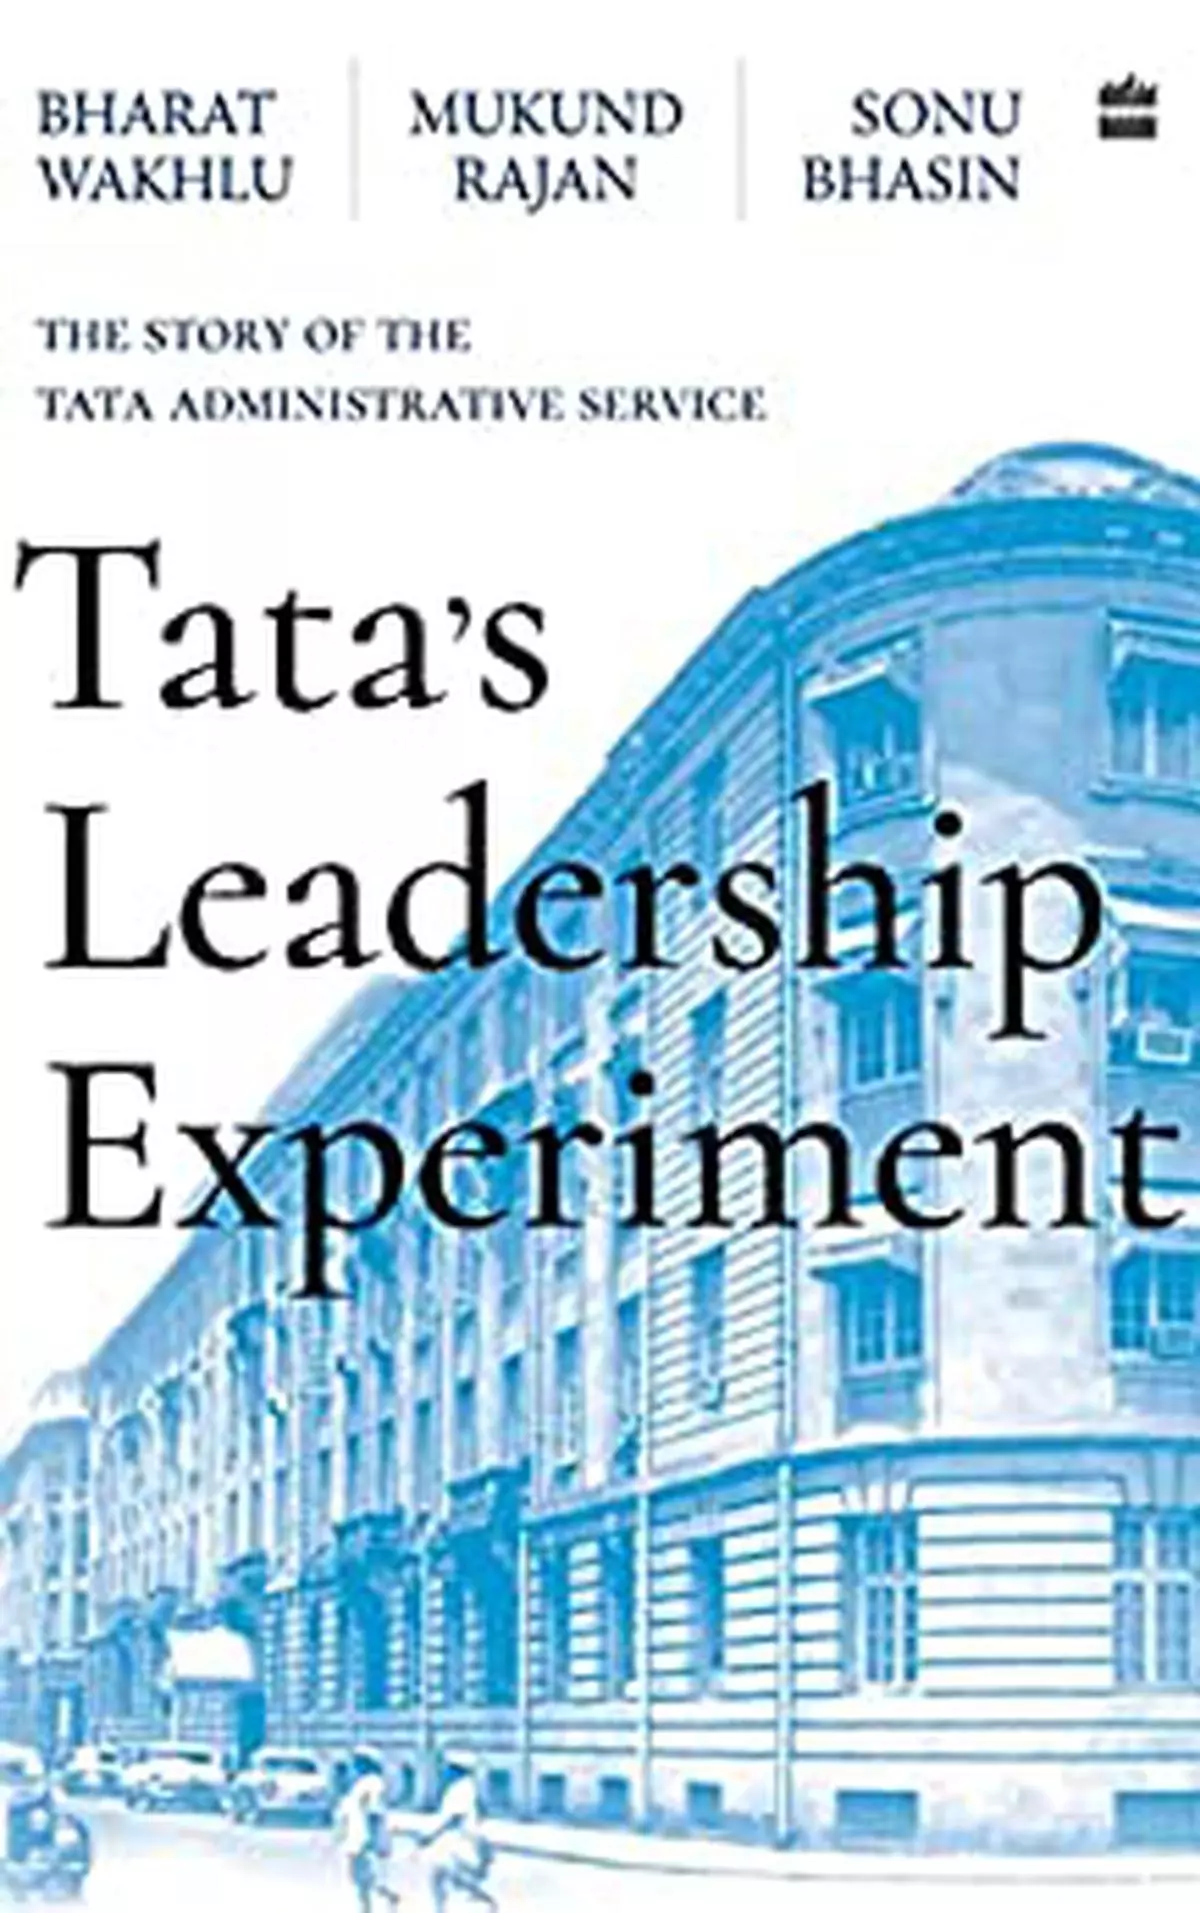  Tata’s Leadership Experiment: The story of the Tata Administrative Service 